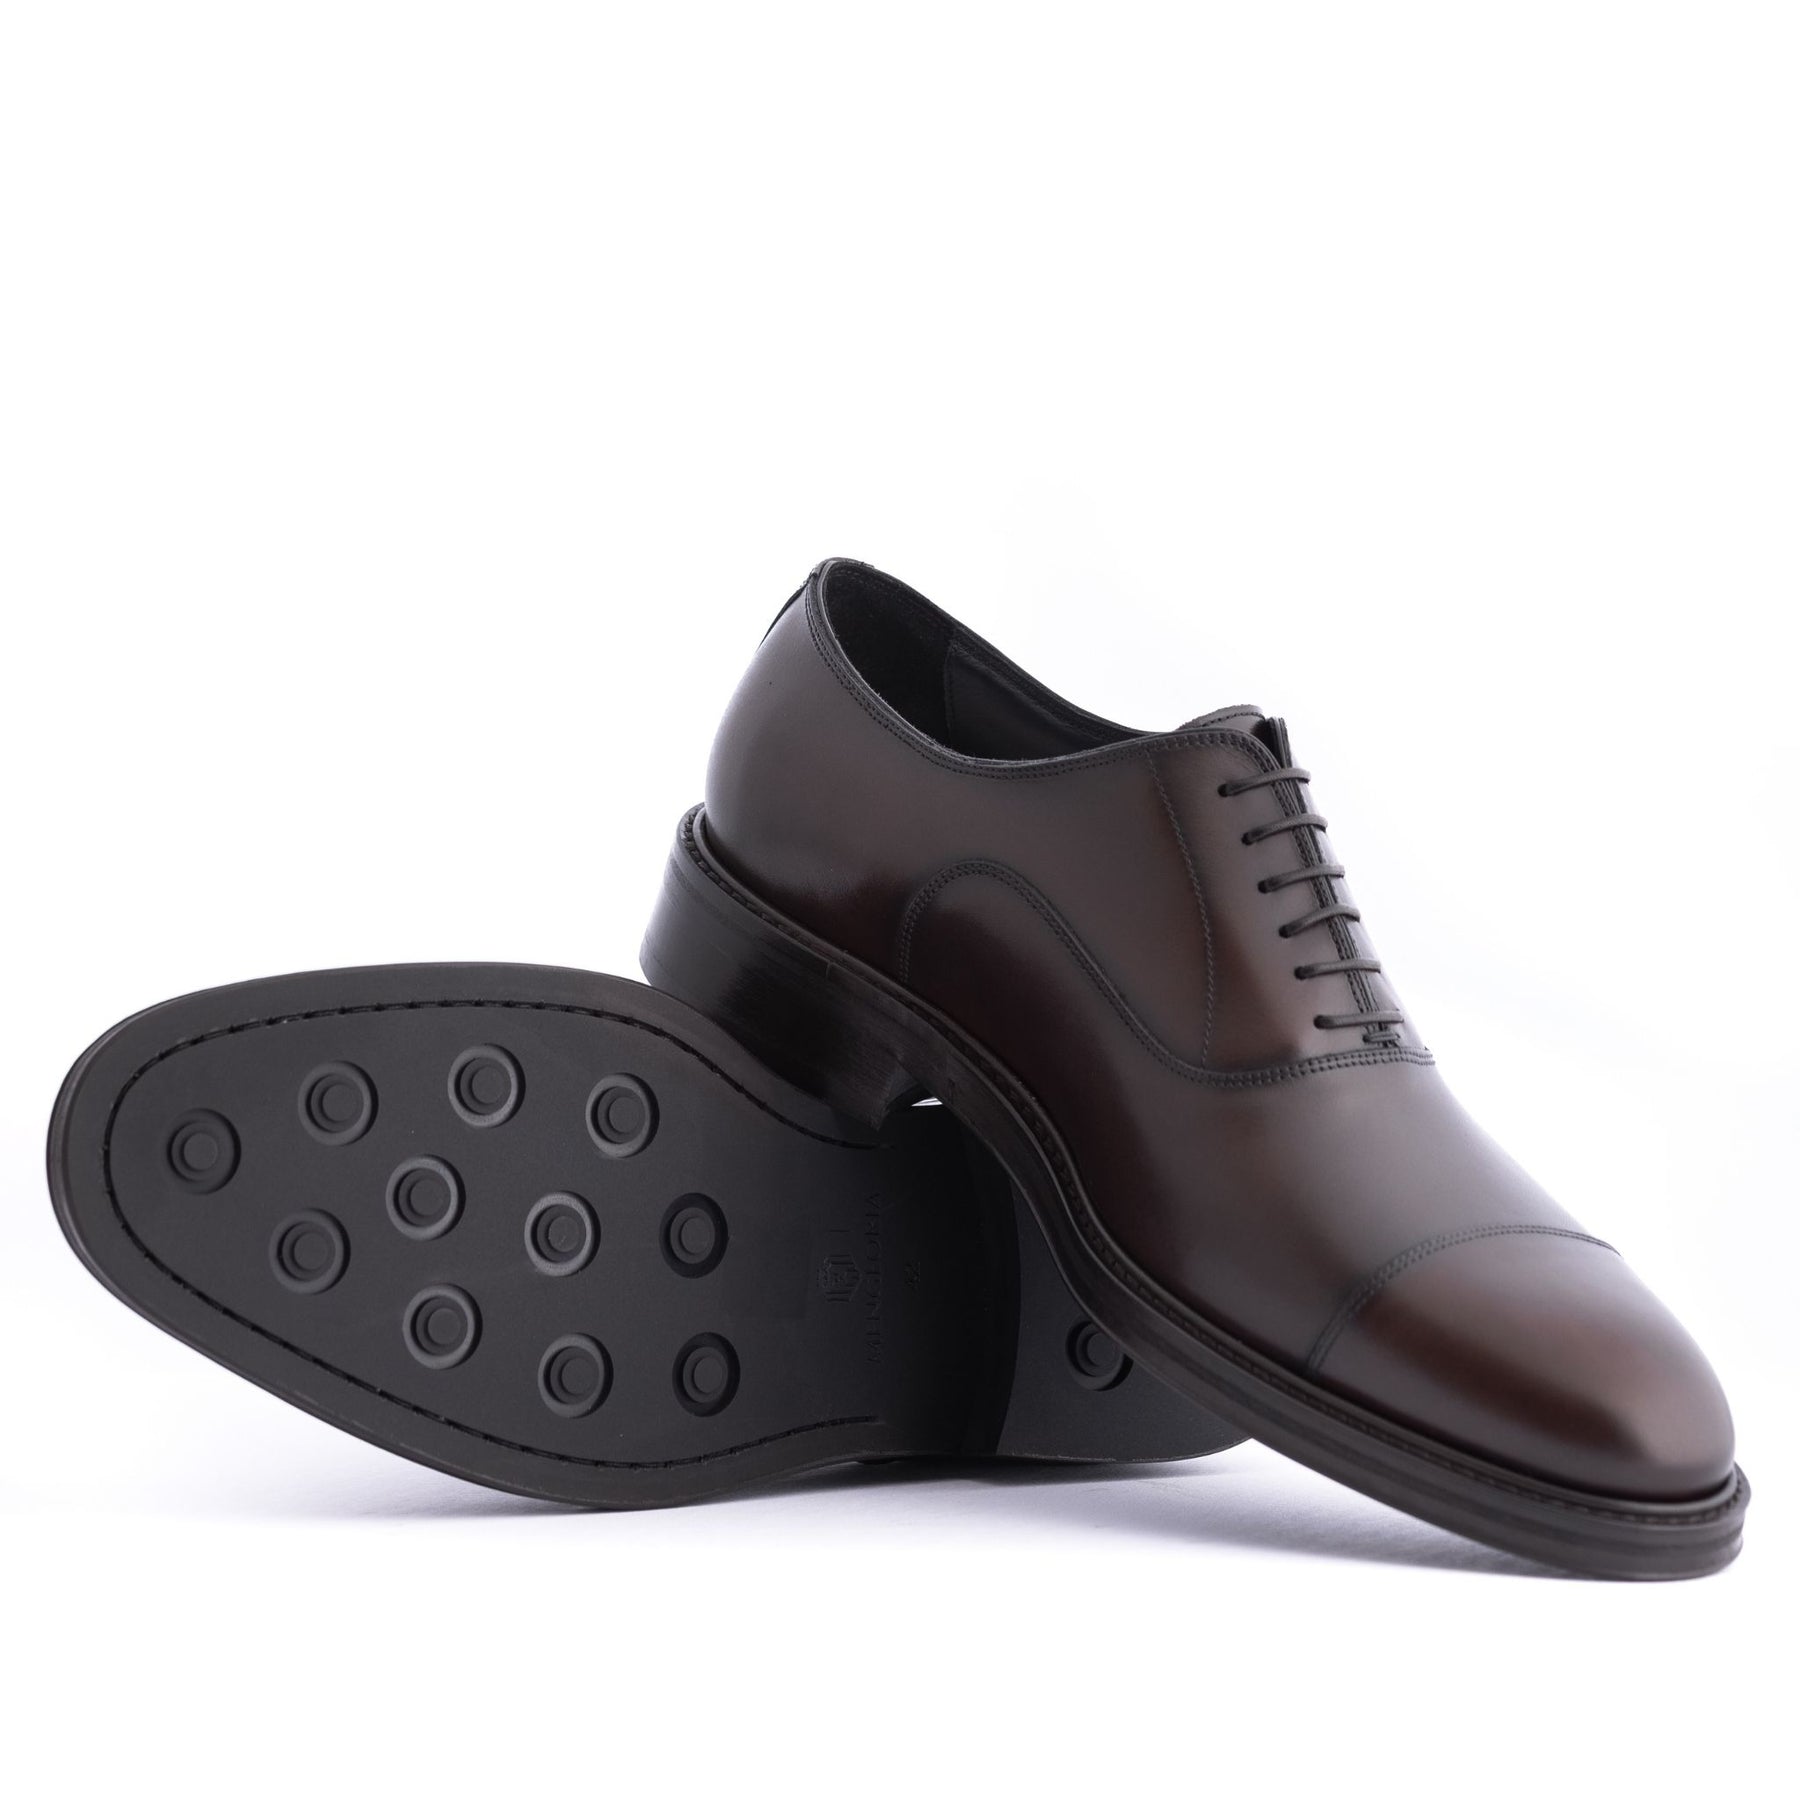 Regent CL Oxford Shoes | Dark Brown